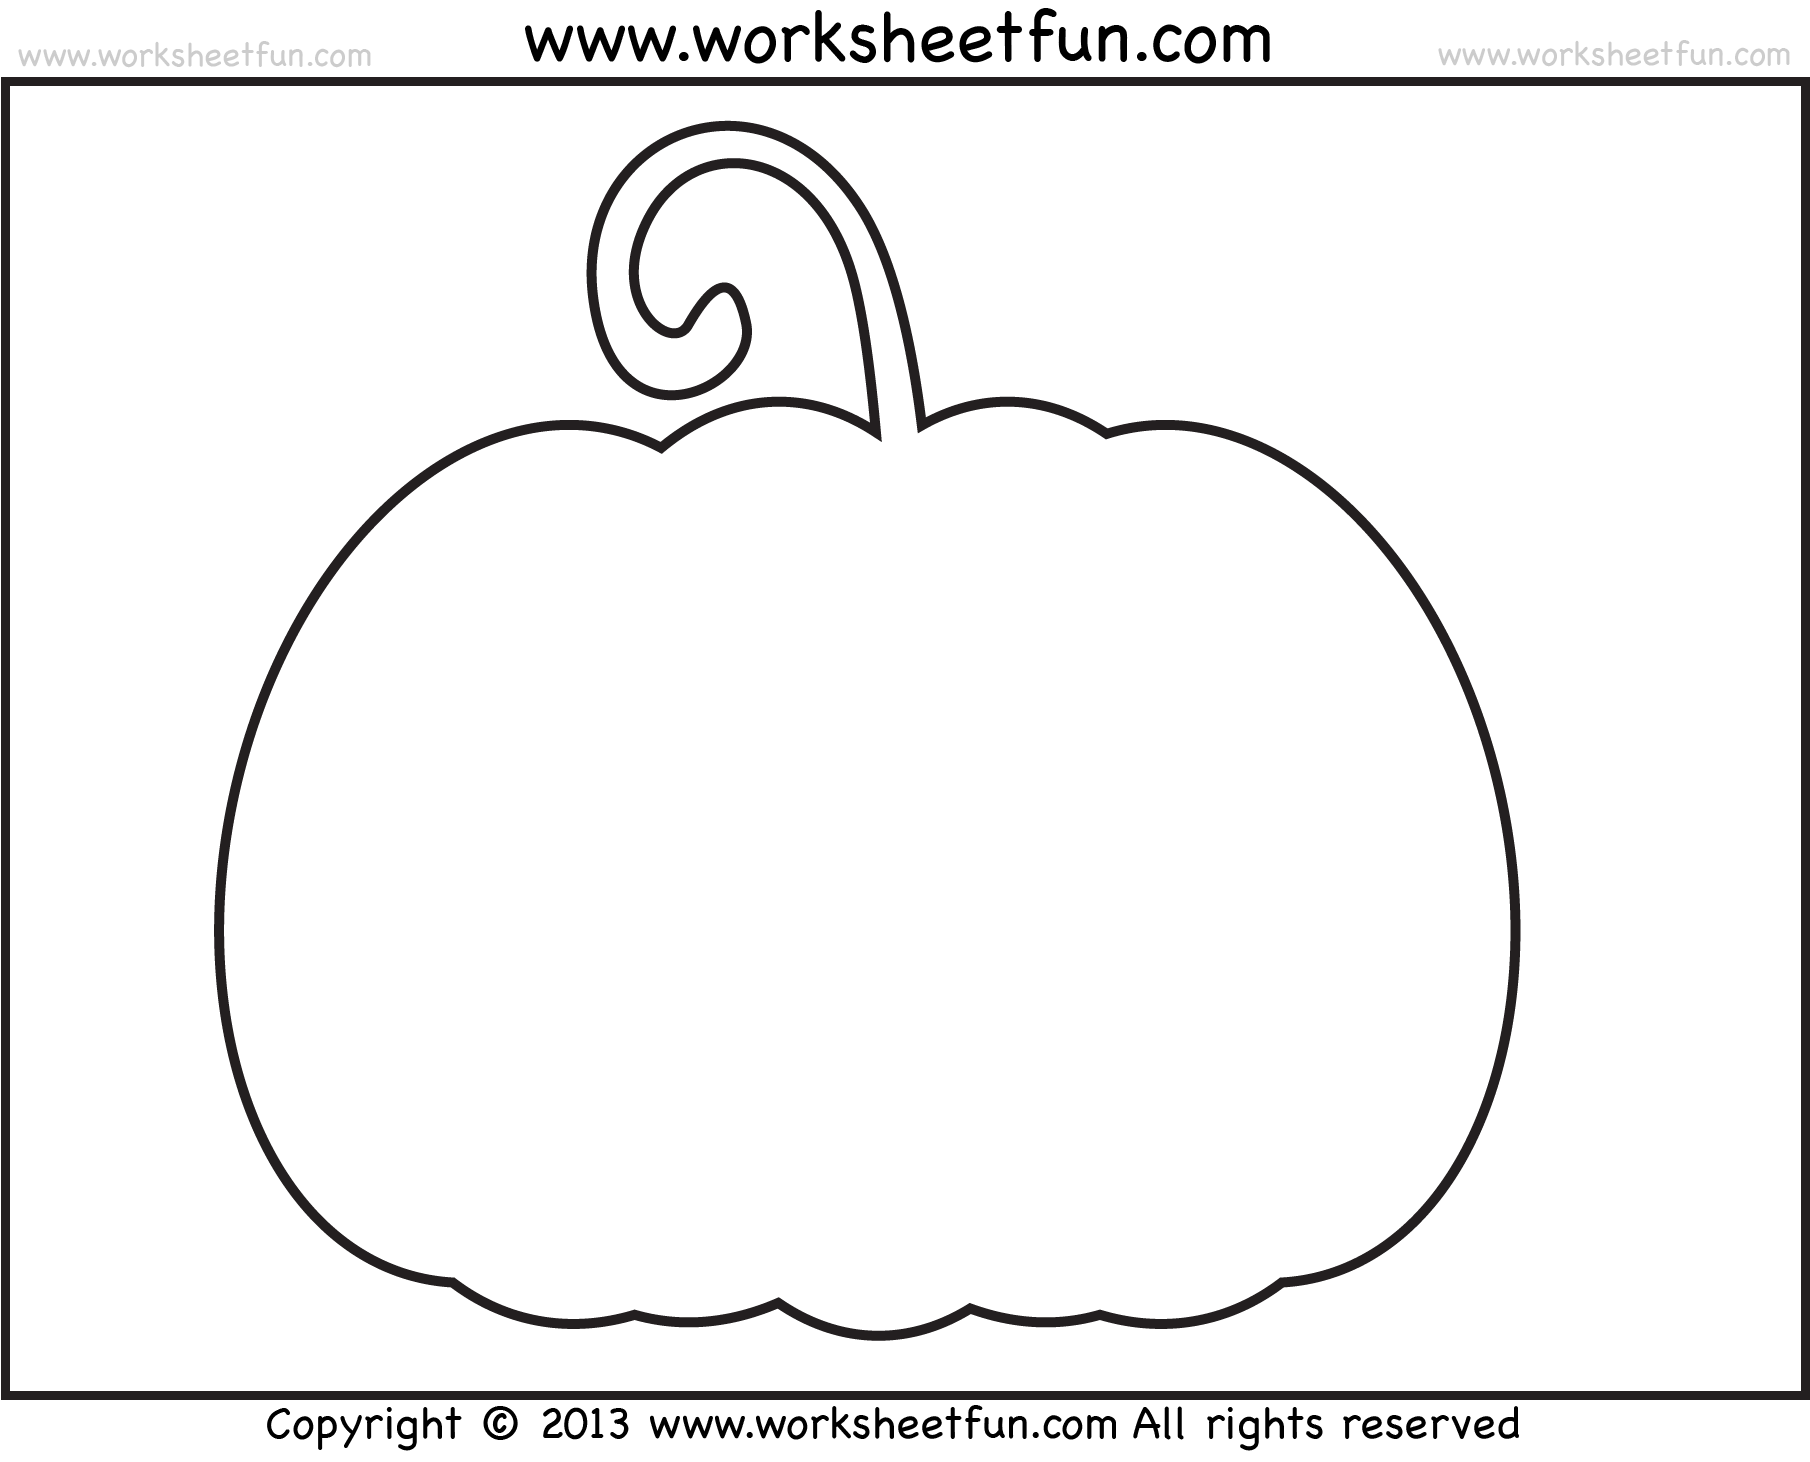 halloween-printable-stencils-for-pumpkin-2-worksheets-free-printable-worksheets-worksheetfun